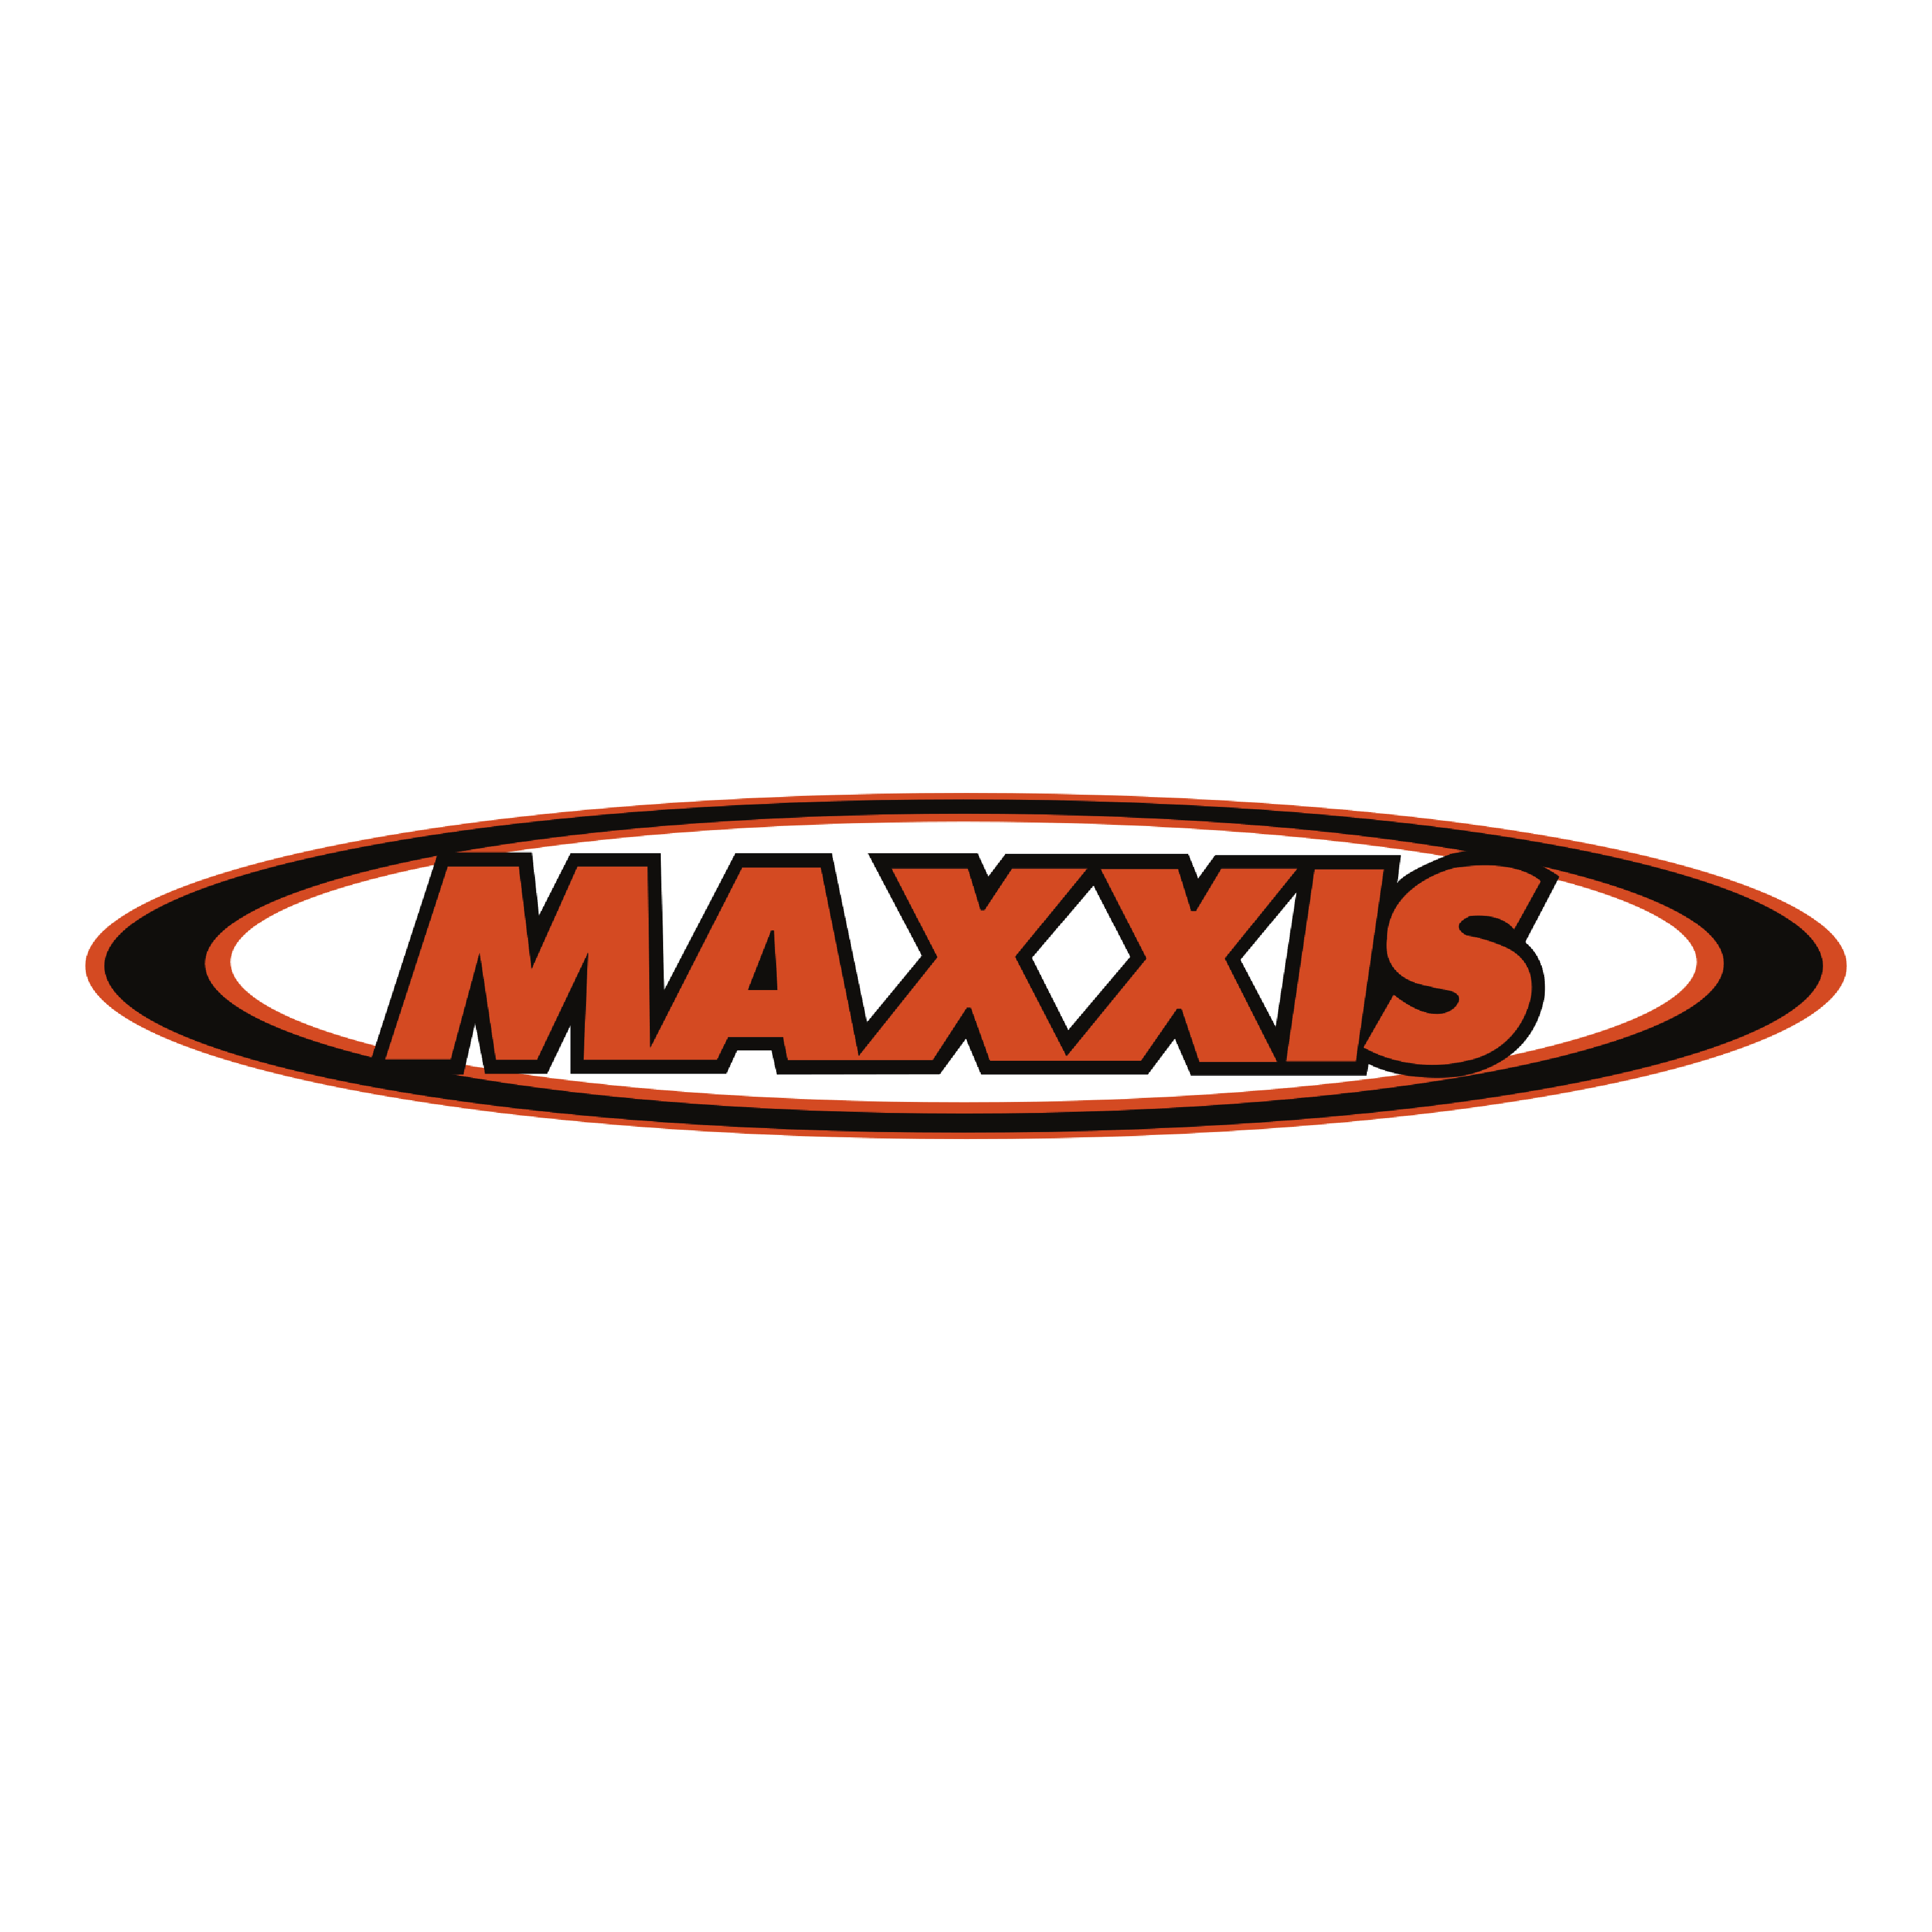 maxxis-logo-carousel